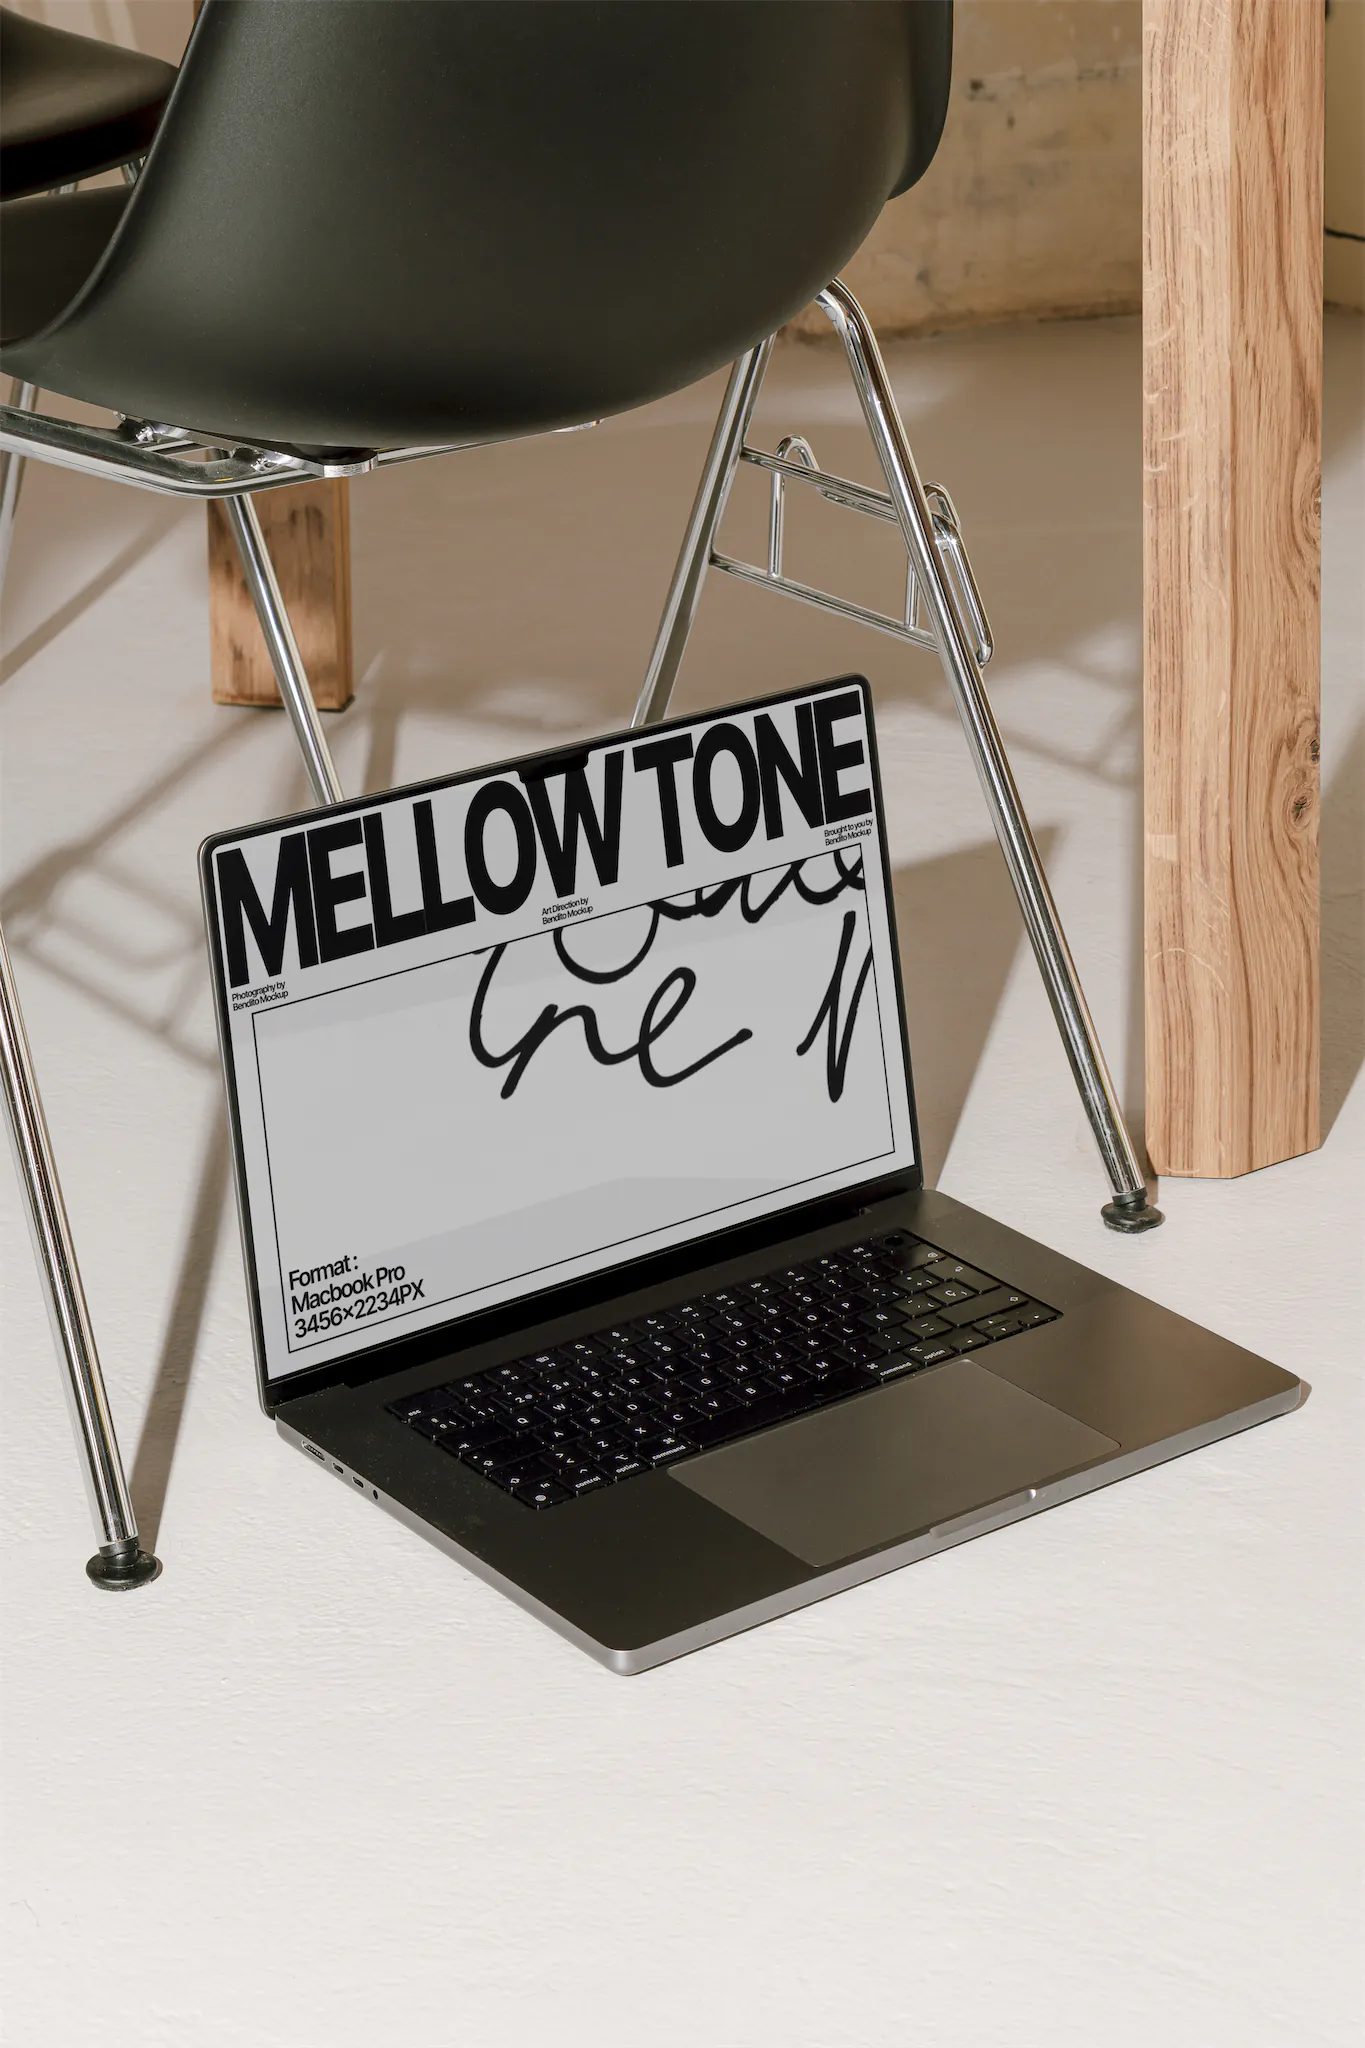 Premium macbook pro mockup placed below a metallic designer's chair. High quality macbook pro mockup resting on white concrete surface. Macbook pro mockup